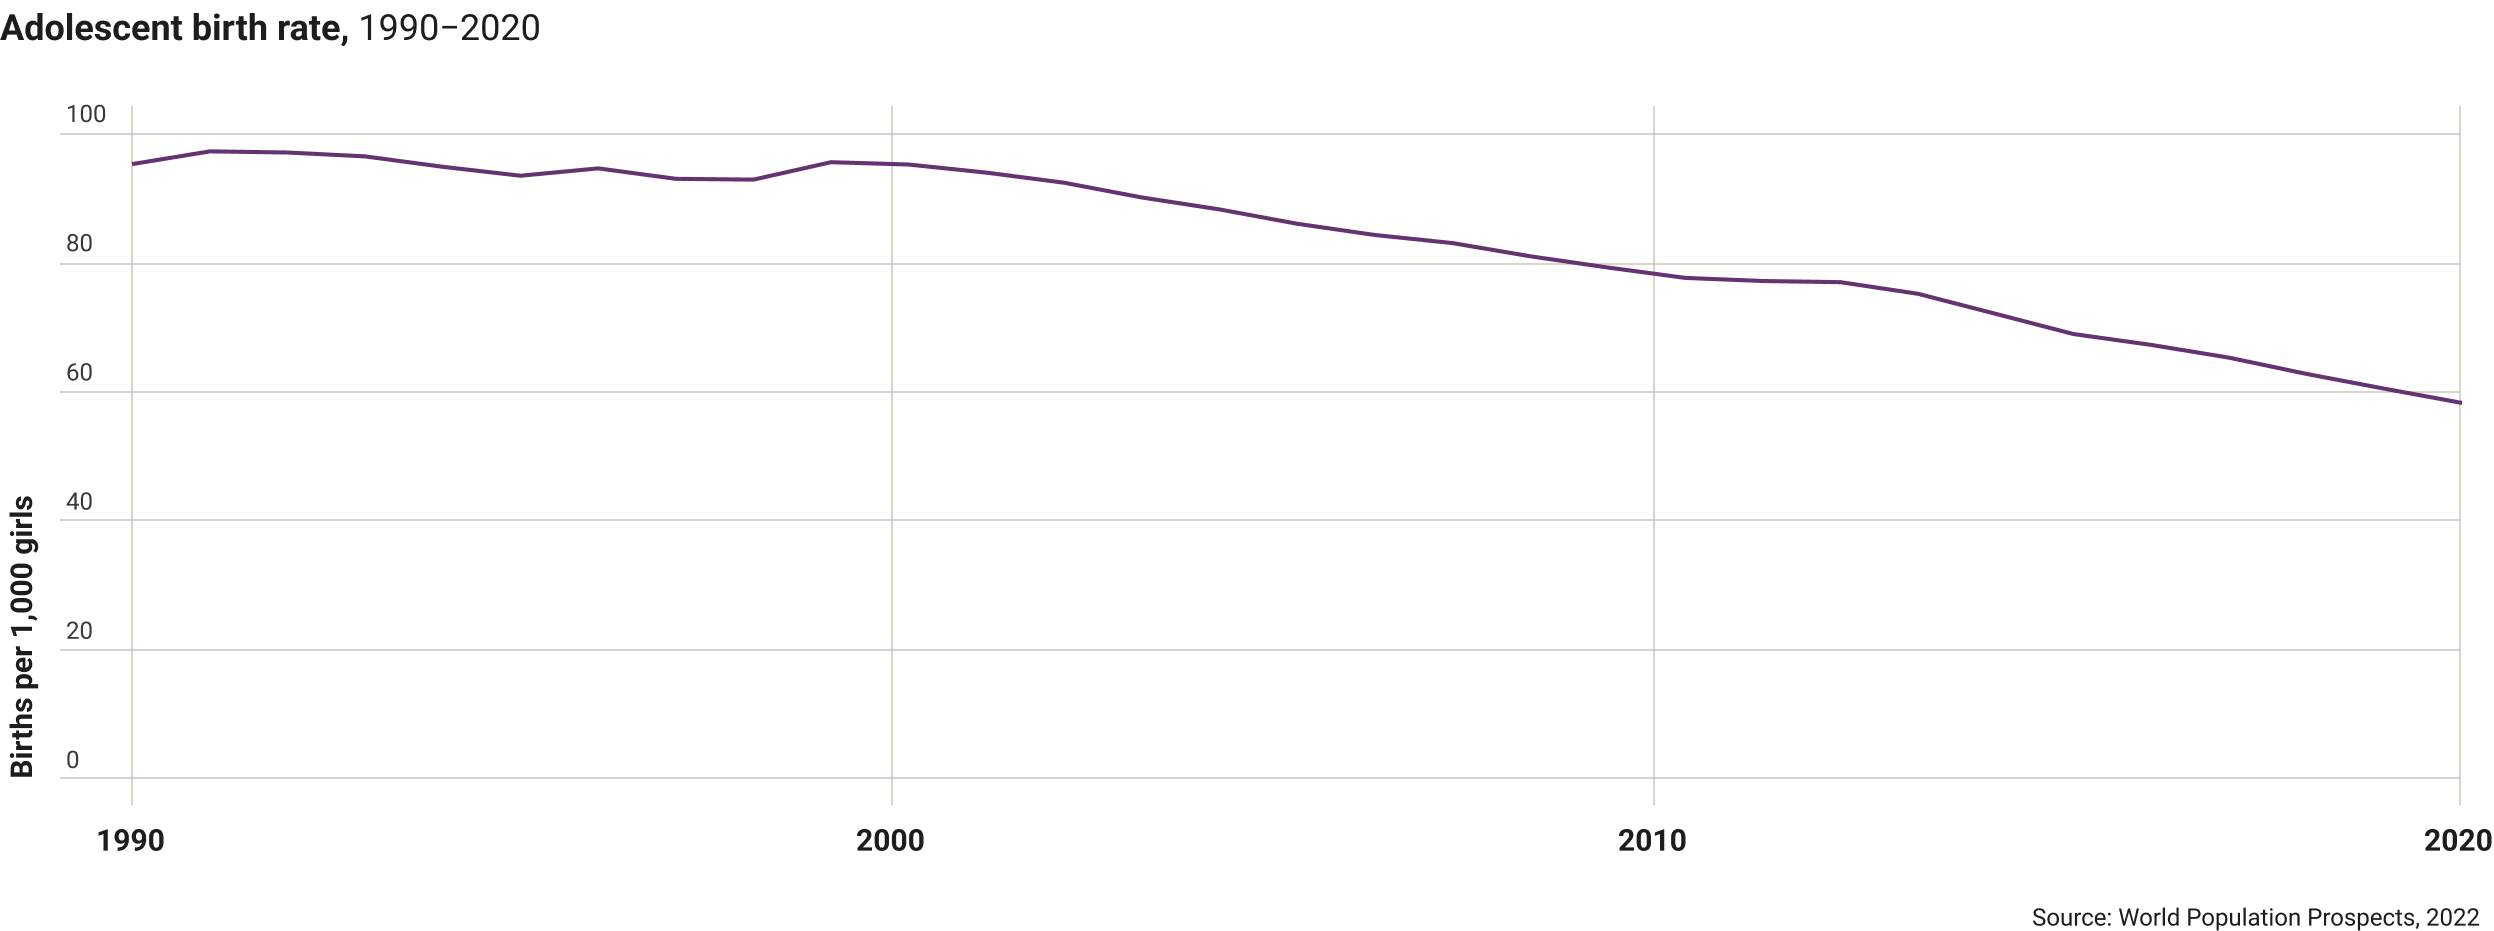 colombia-adolescence-birth-rate-1990-2020